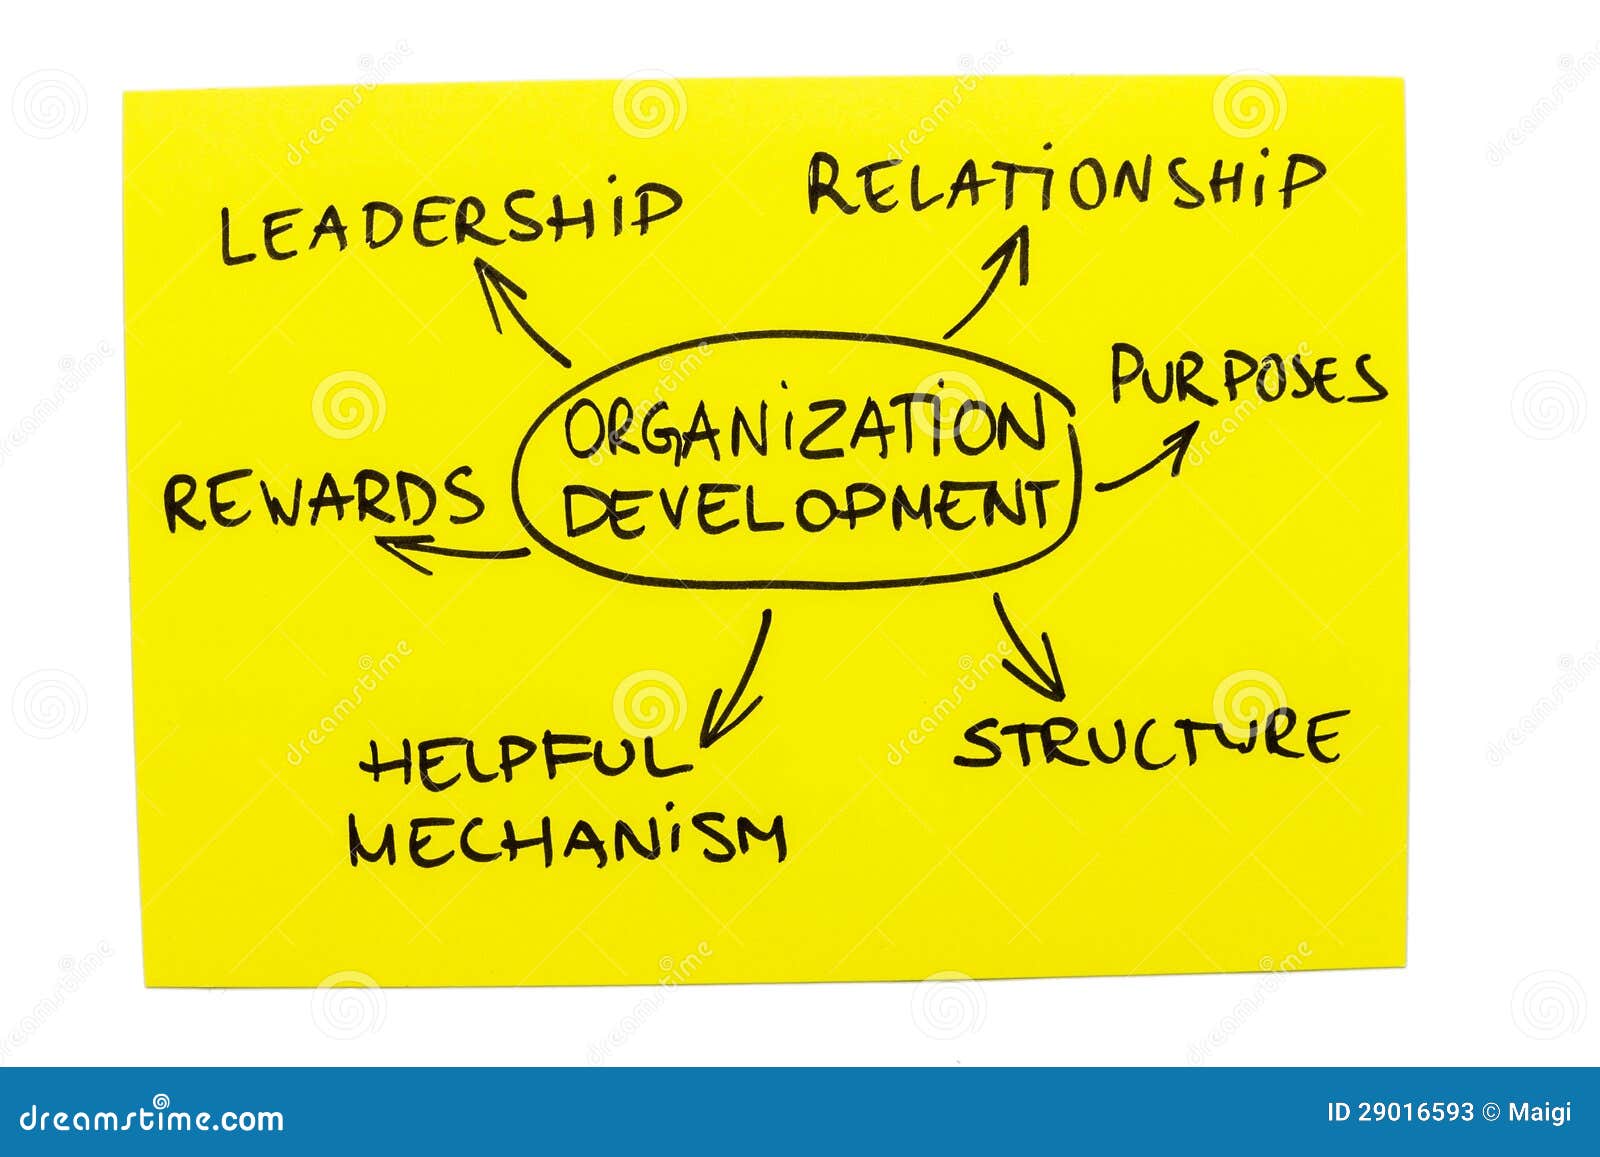 Organization Development Diagram Stock Photos - Image: 29016593